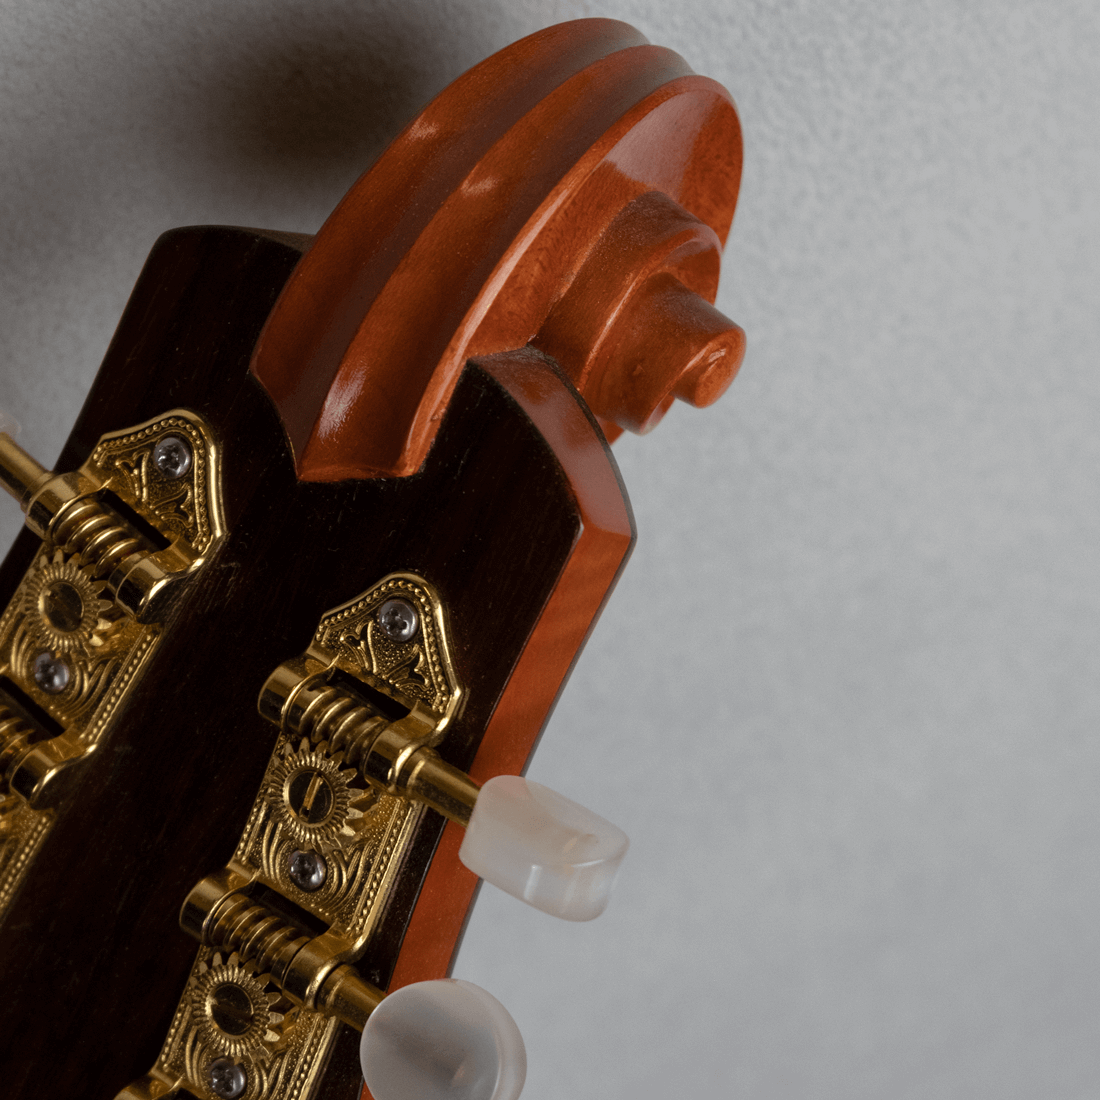 mandolin italian for concert scroll